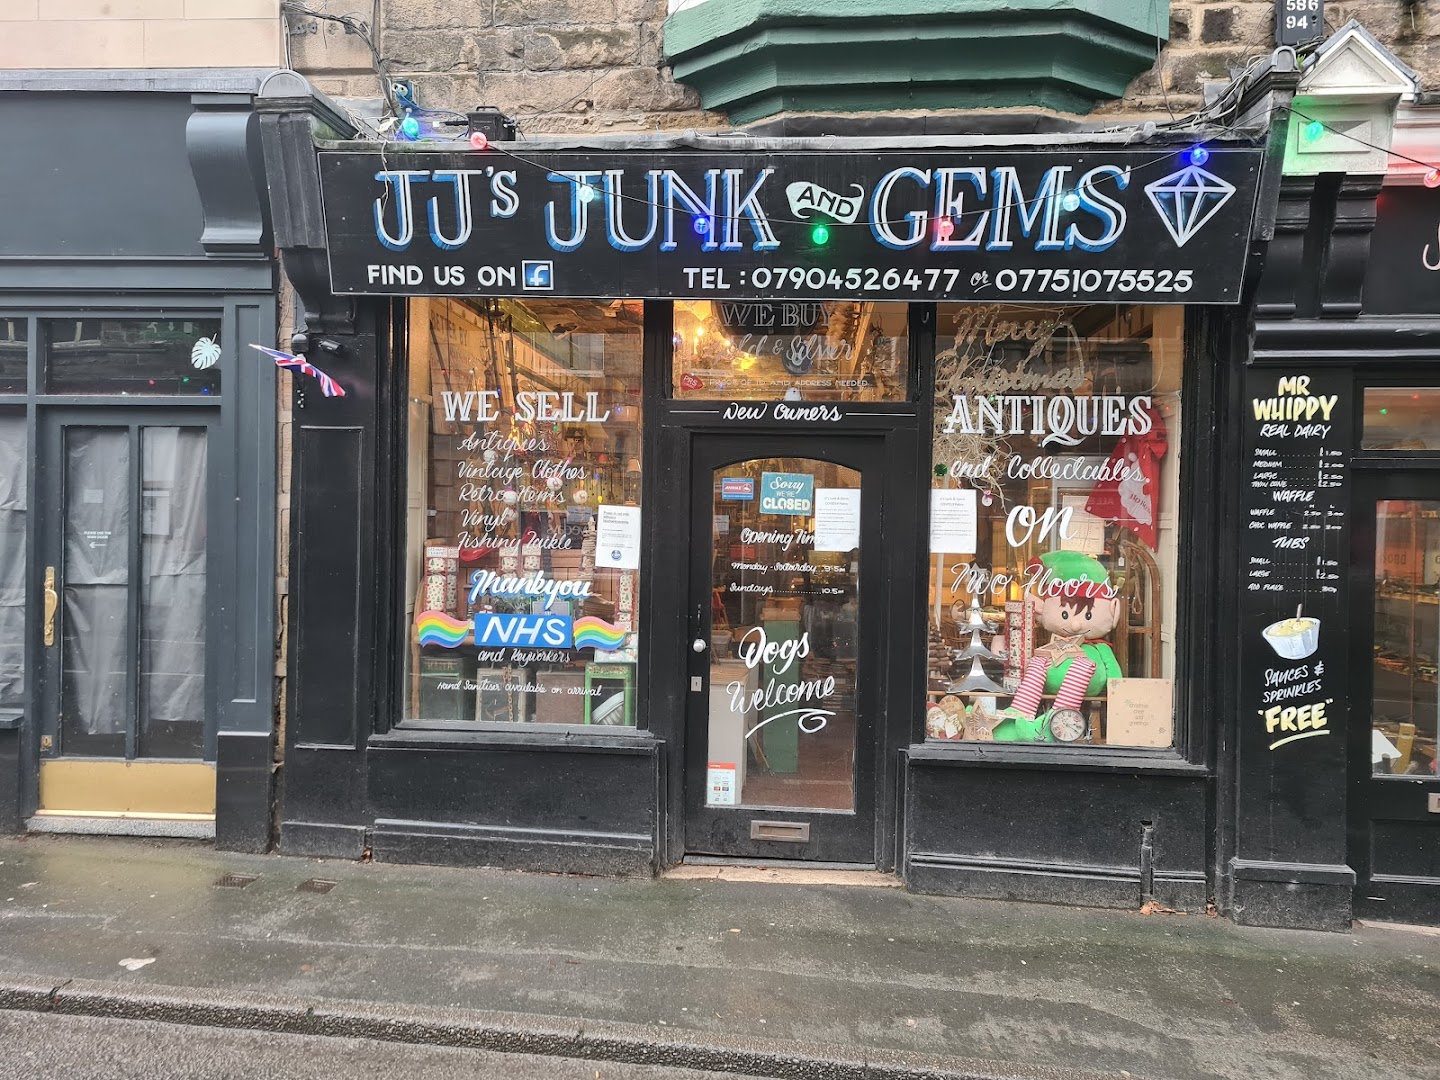 JJs Junk and Gems